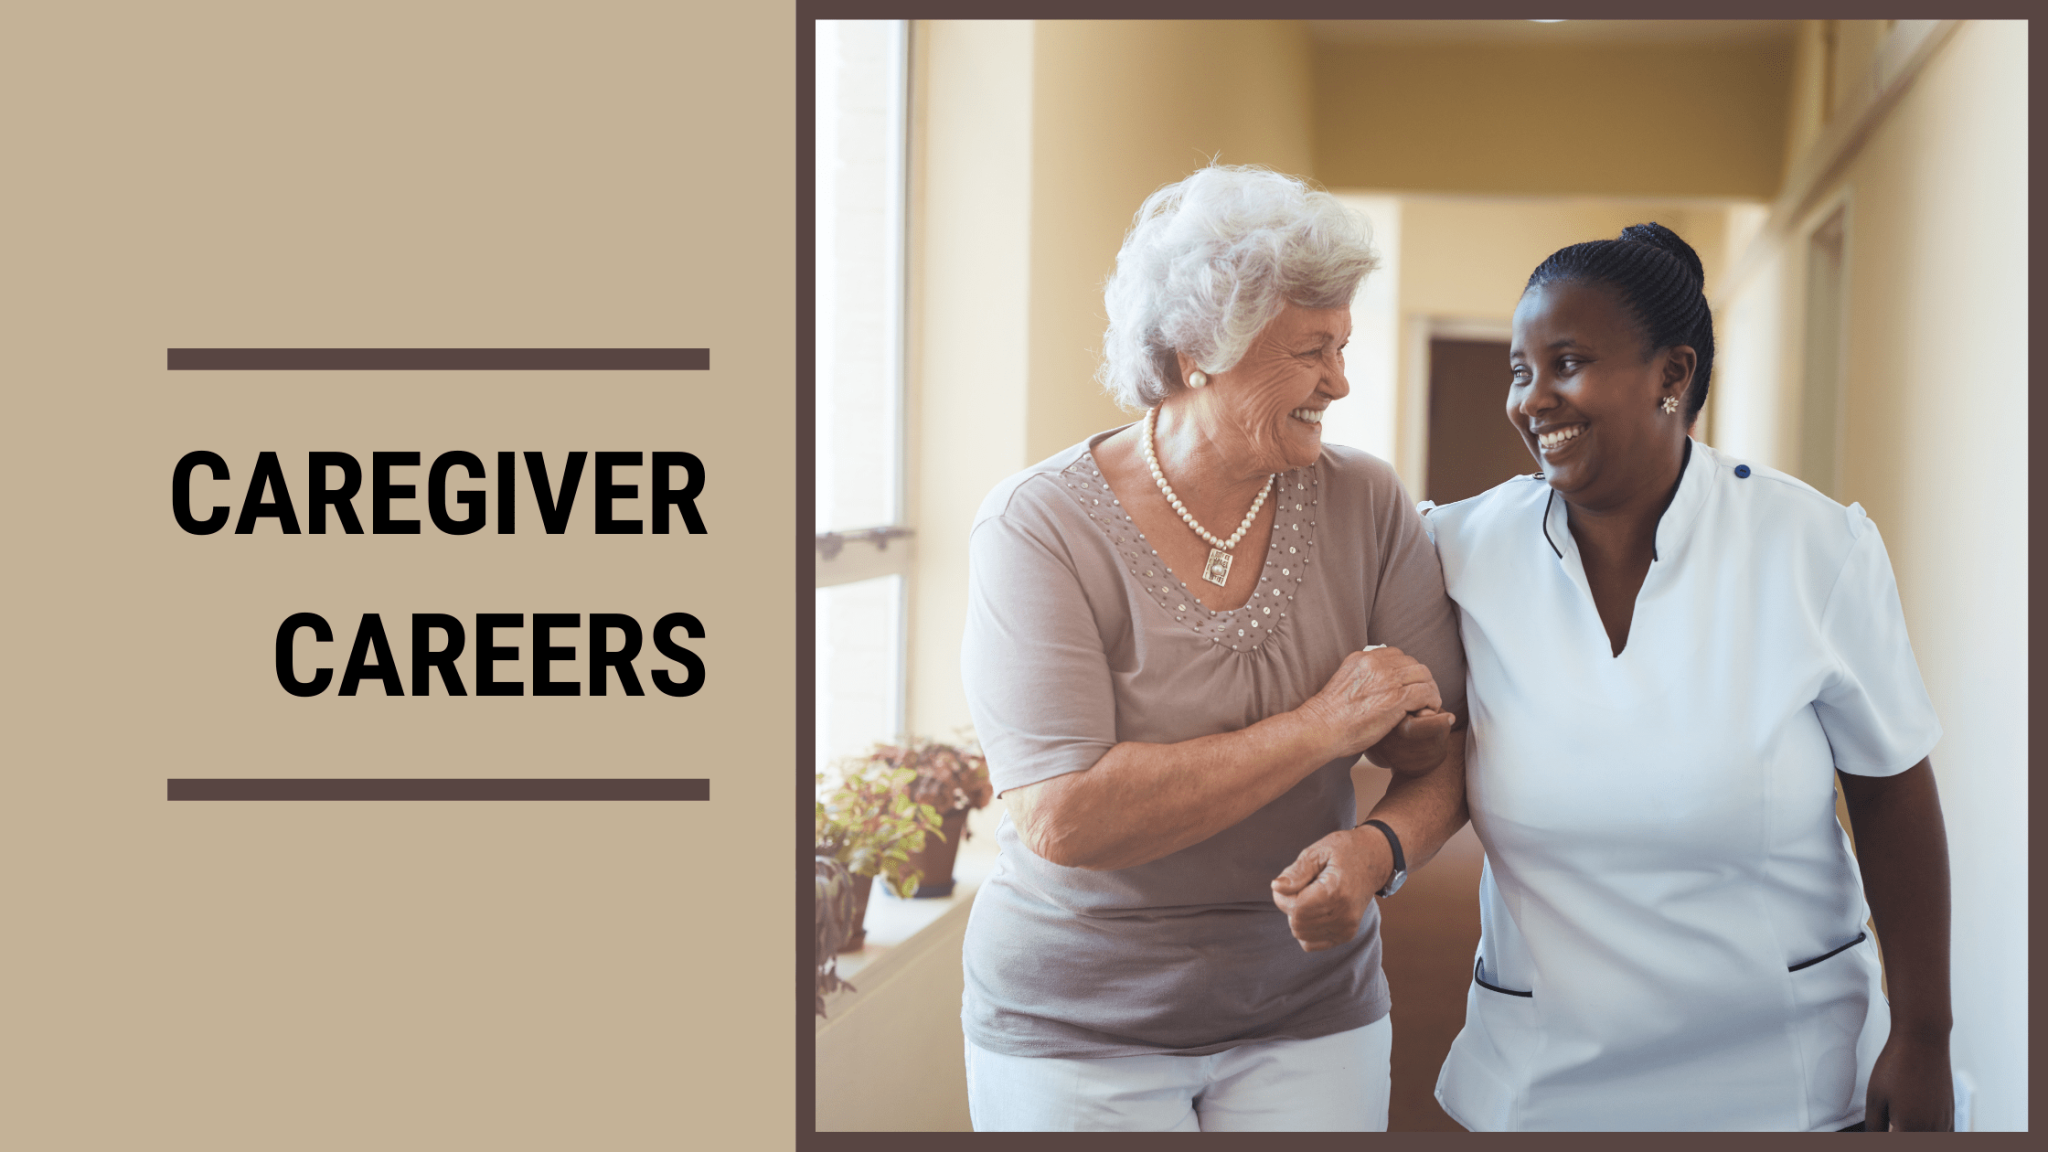 Caregiver Careers Featured Image 2048x1152 